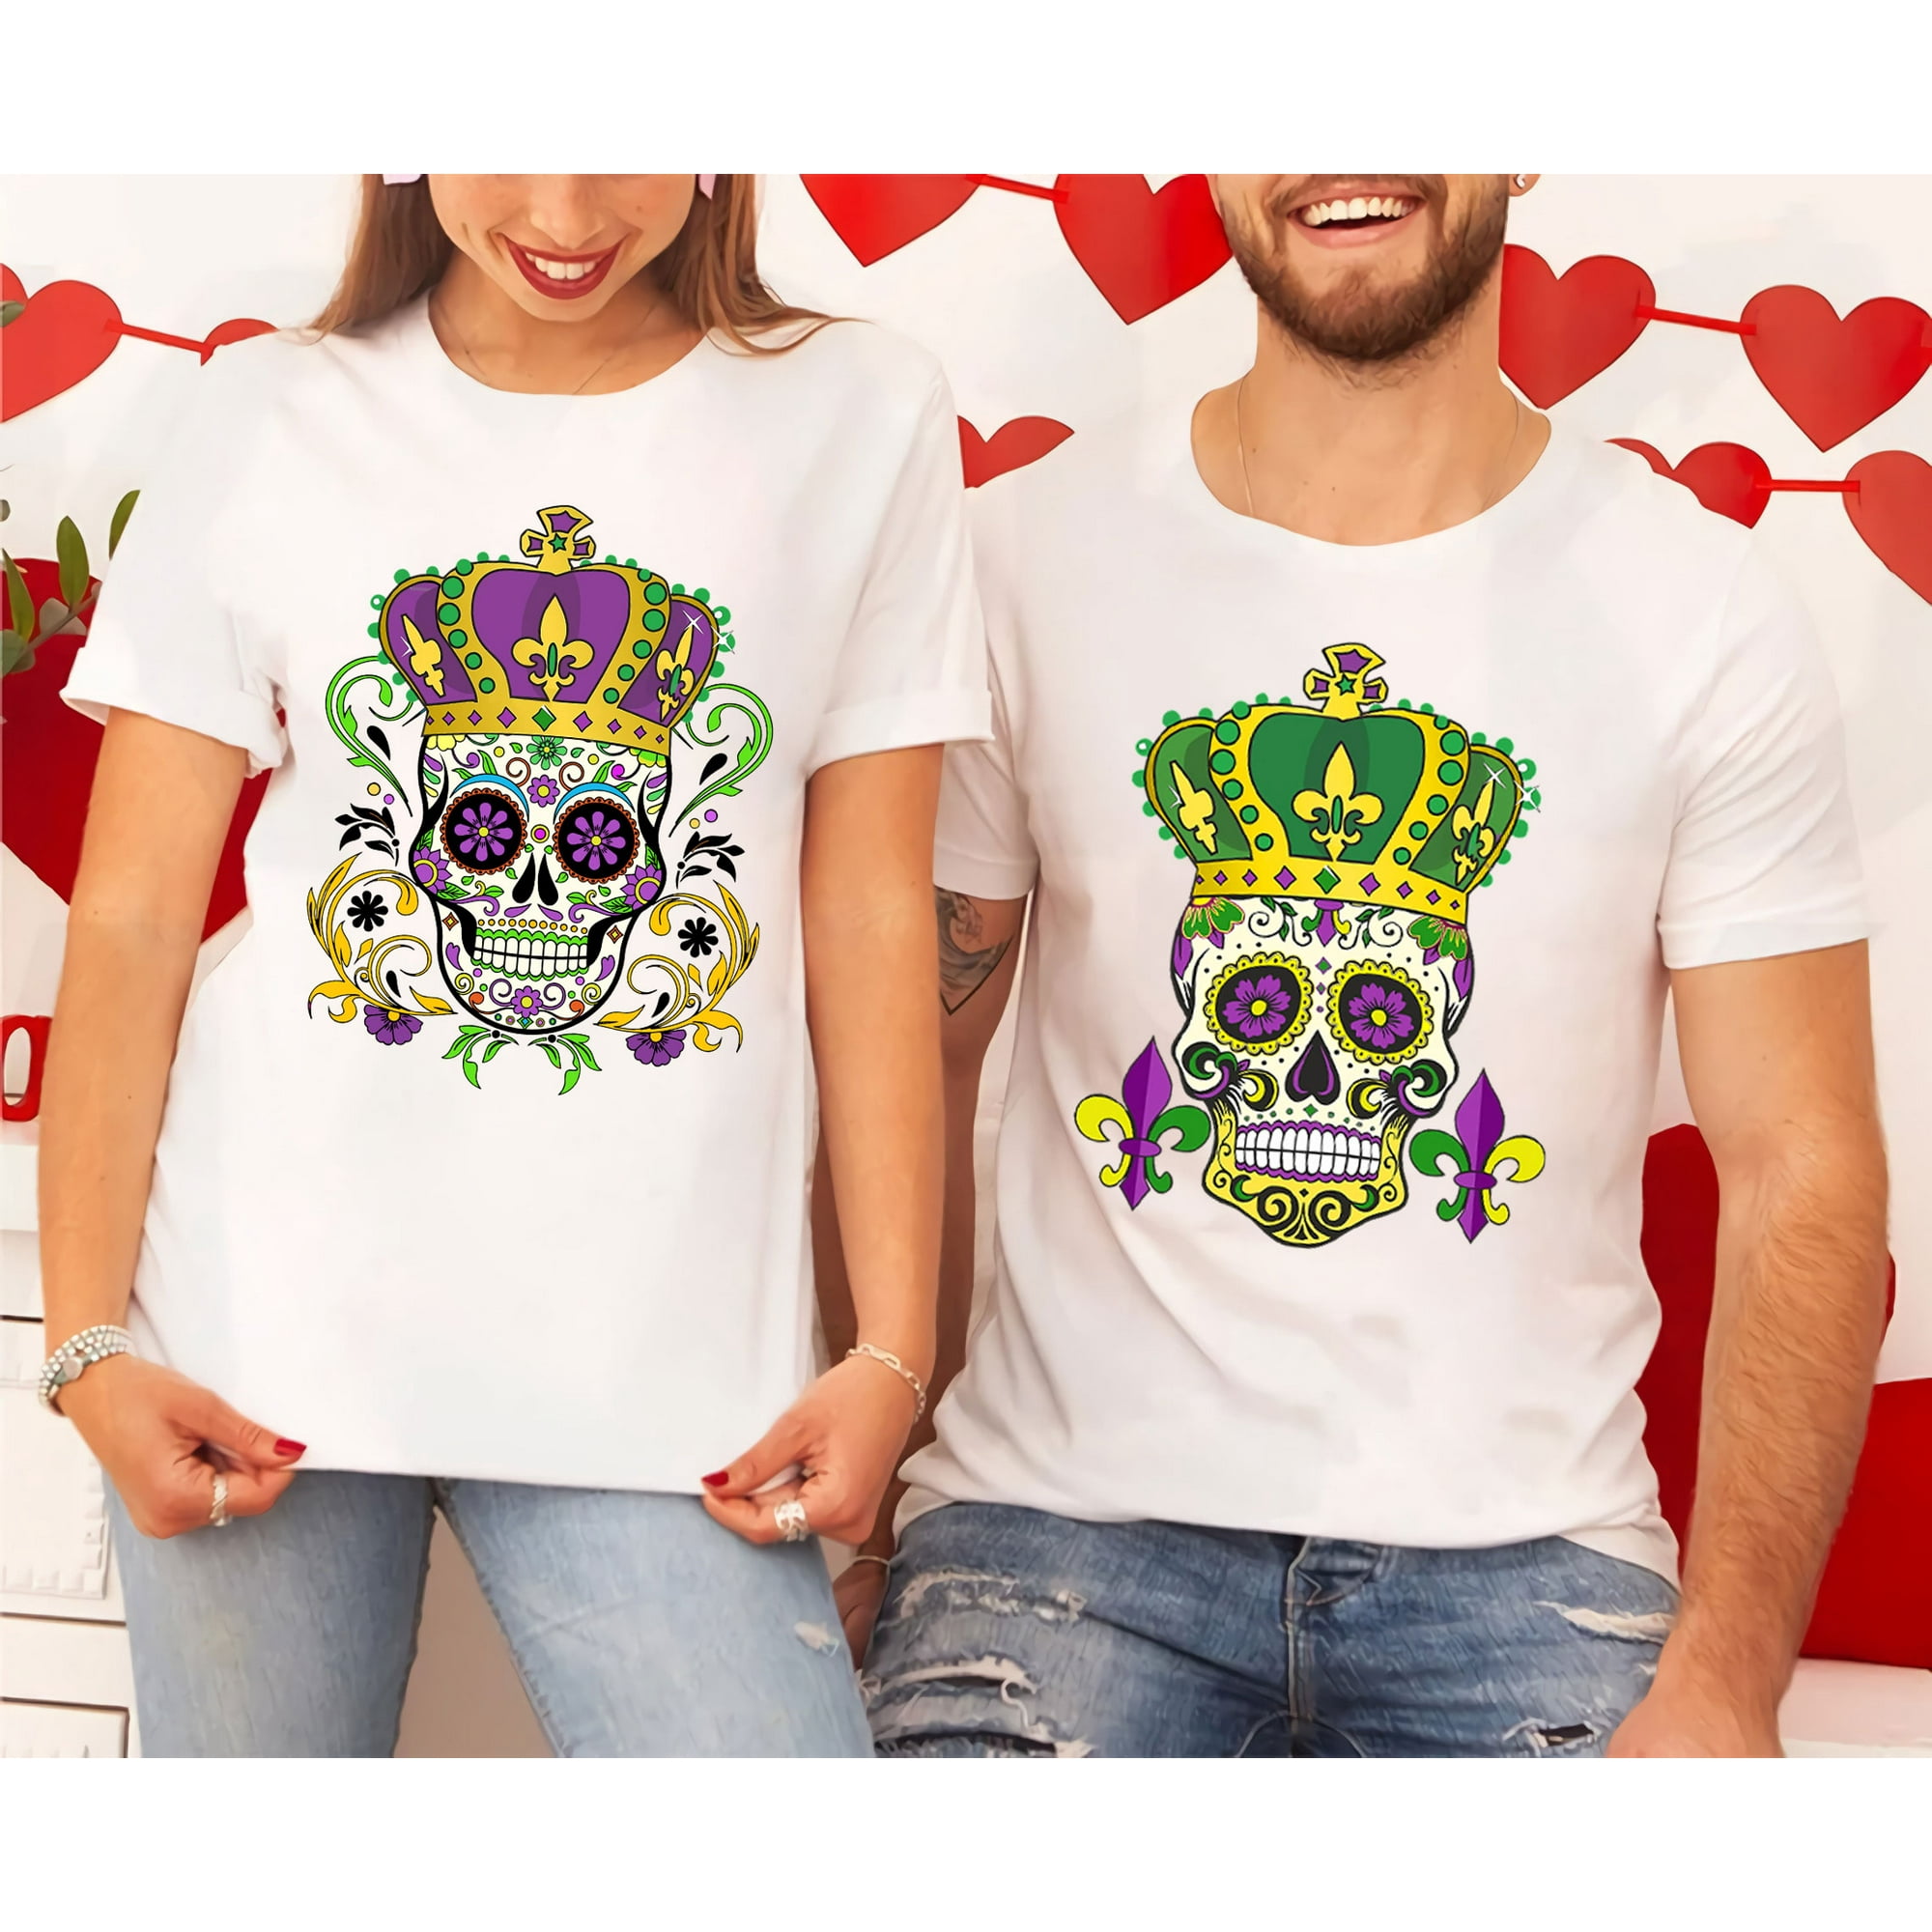 Familyloveshop LLC Skull King n Queen Mardi Grawr T Shirt, Mardi Gras  Couple T-Shirt, Fat Tuesday Shirt, Saints Shirt, Men Women Graphic T Shirts  